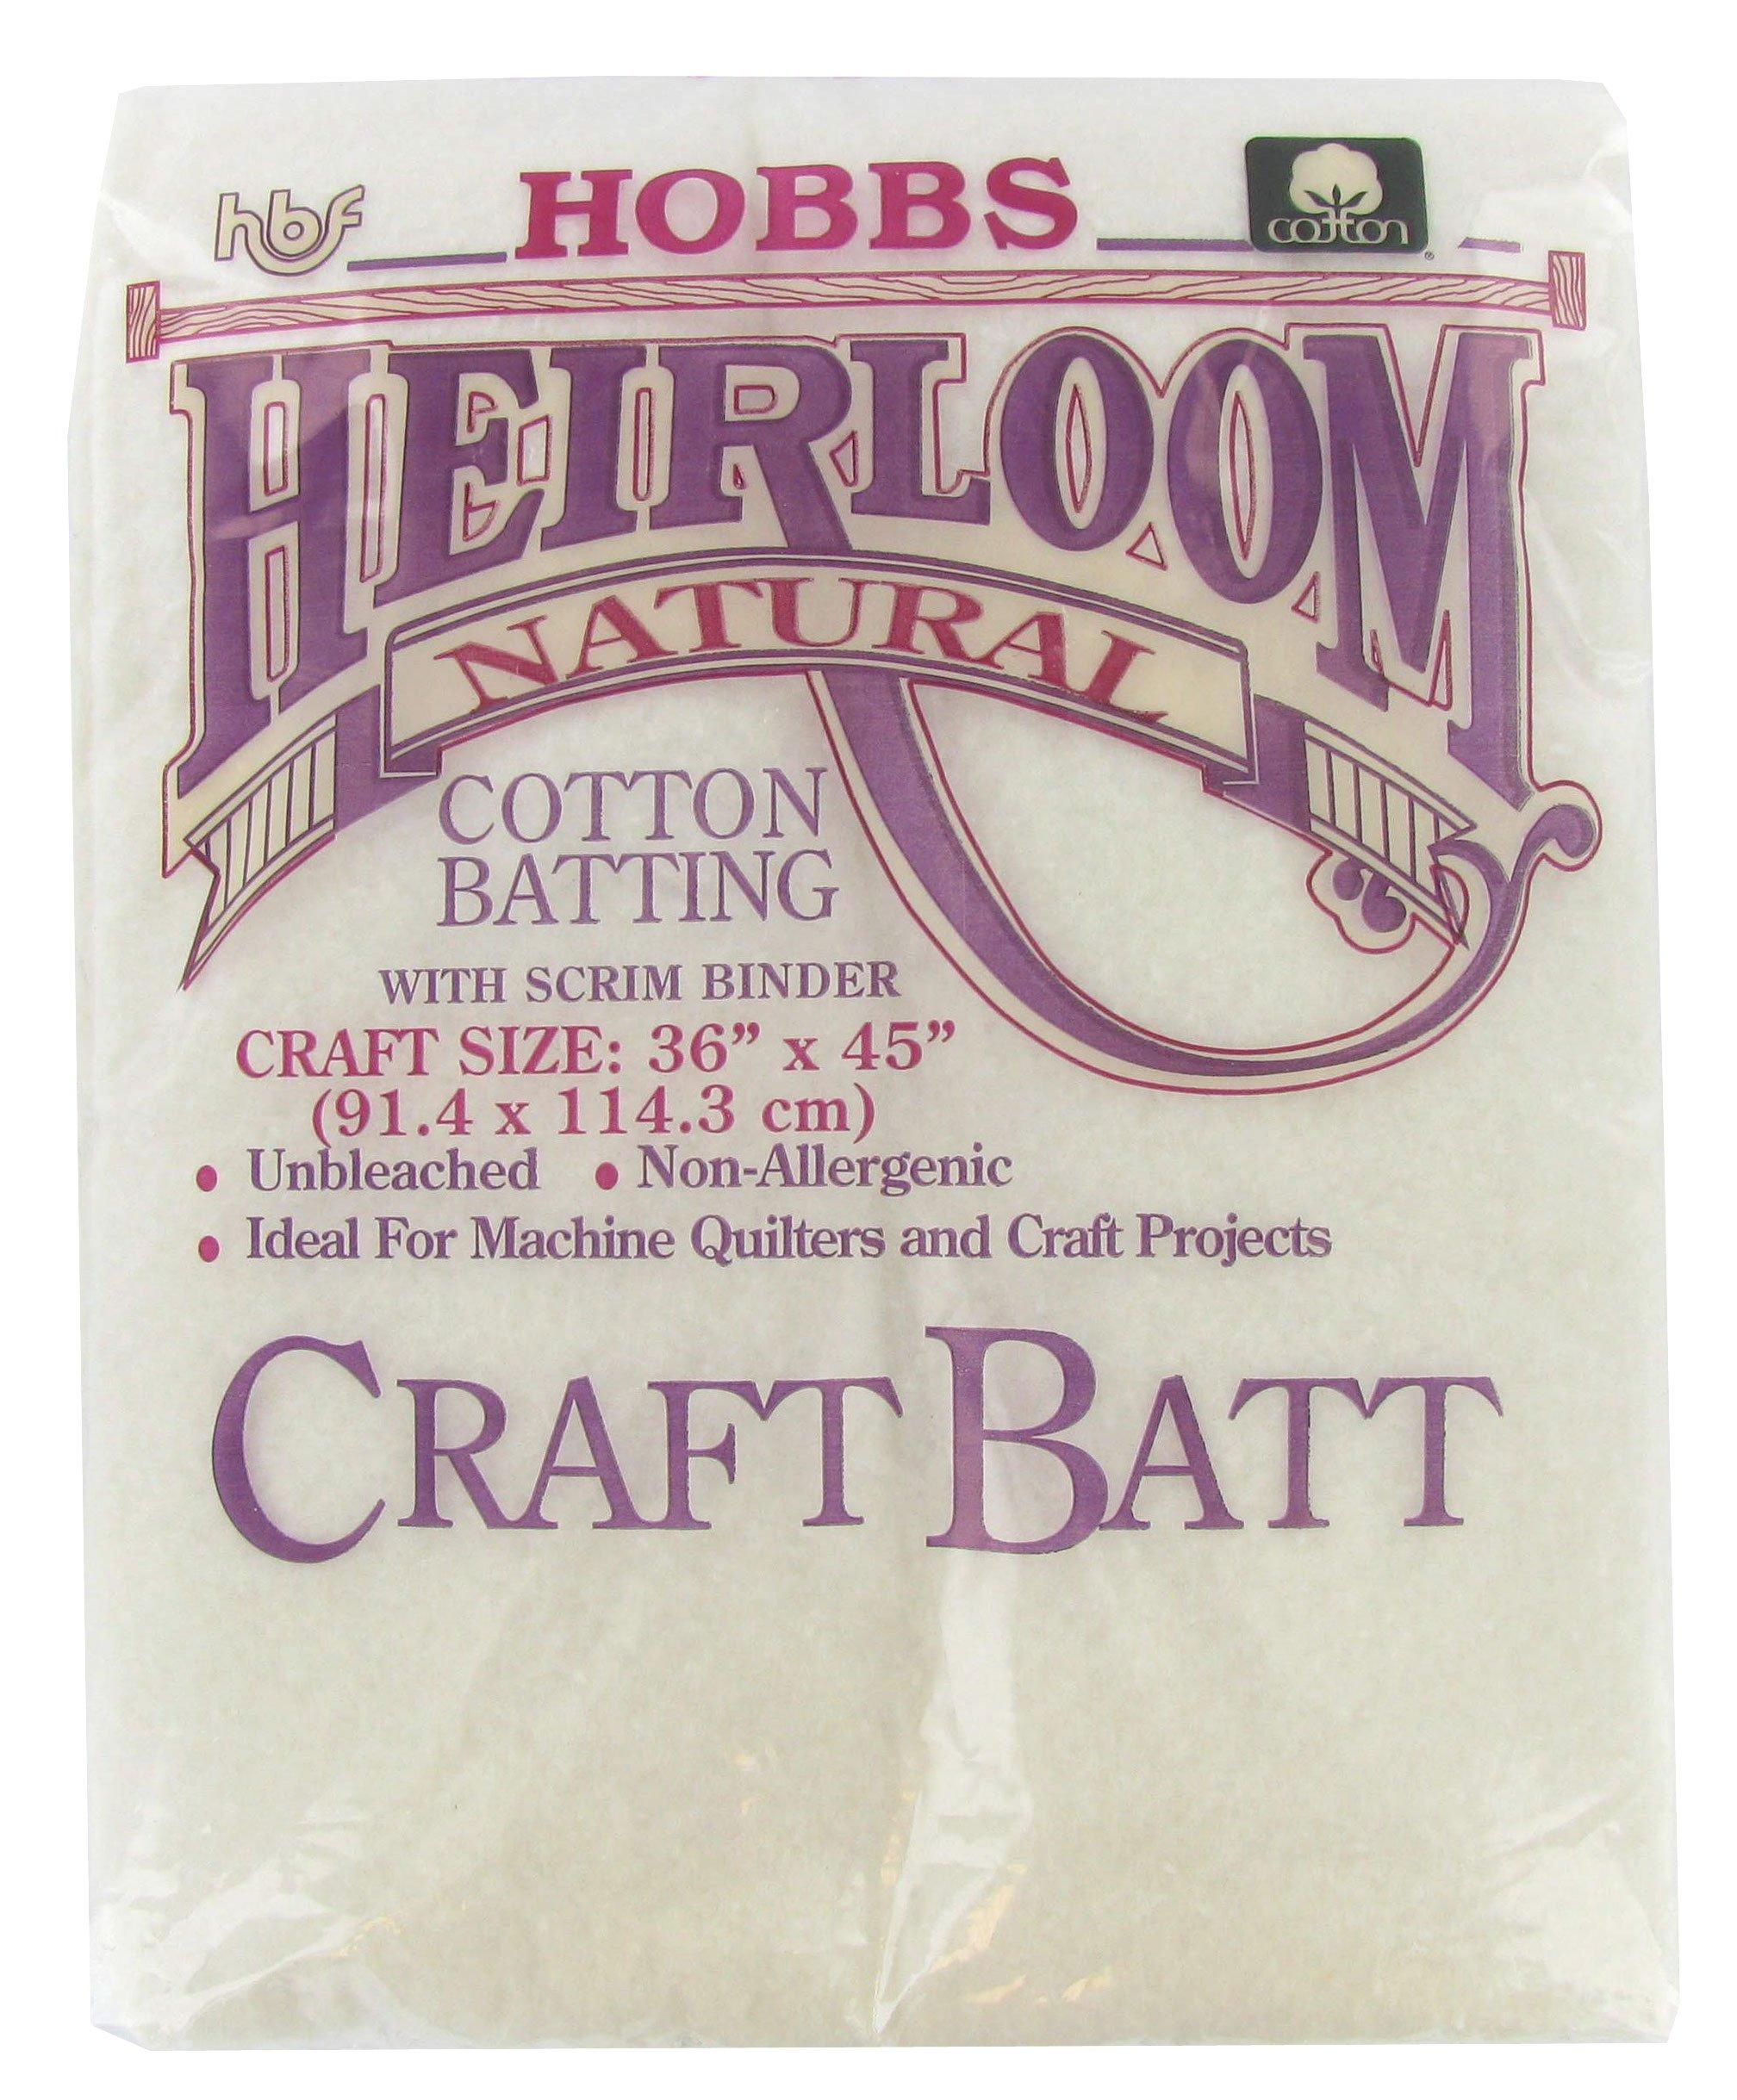 Heirloom Natural Cotton Batting -36 x 45, Hobby Lobby